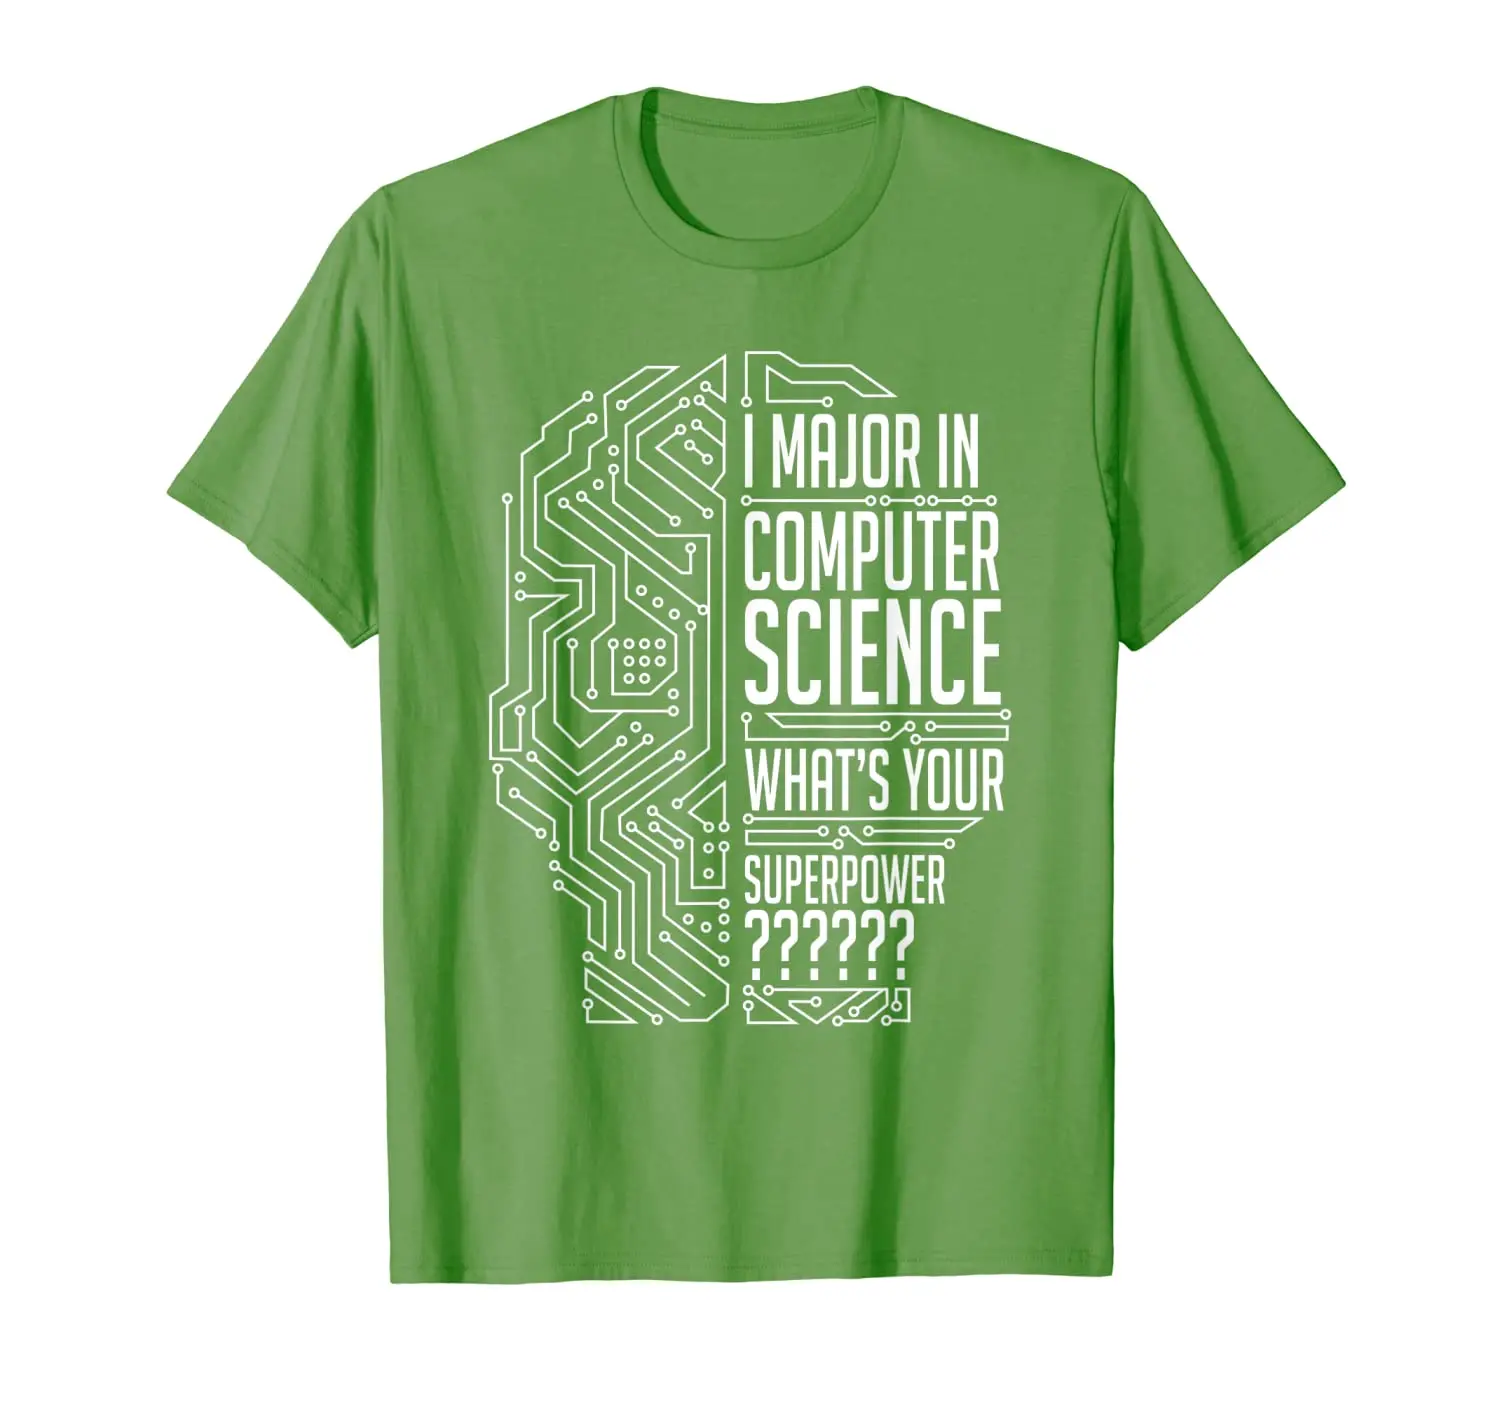 

majored computer science programmer tech support superpower T-Shirt